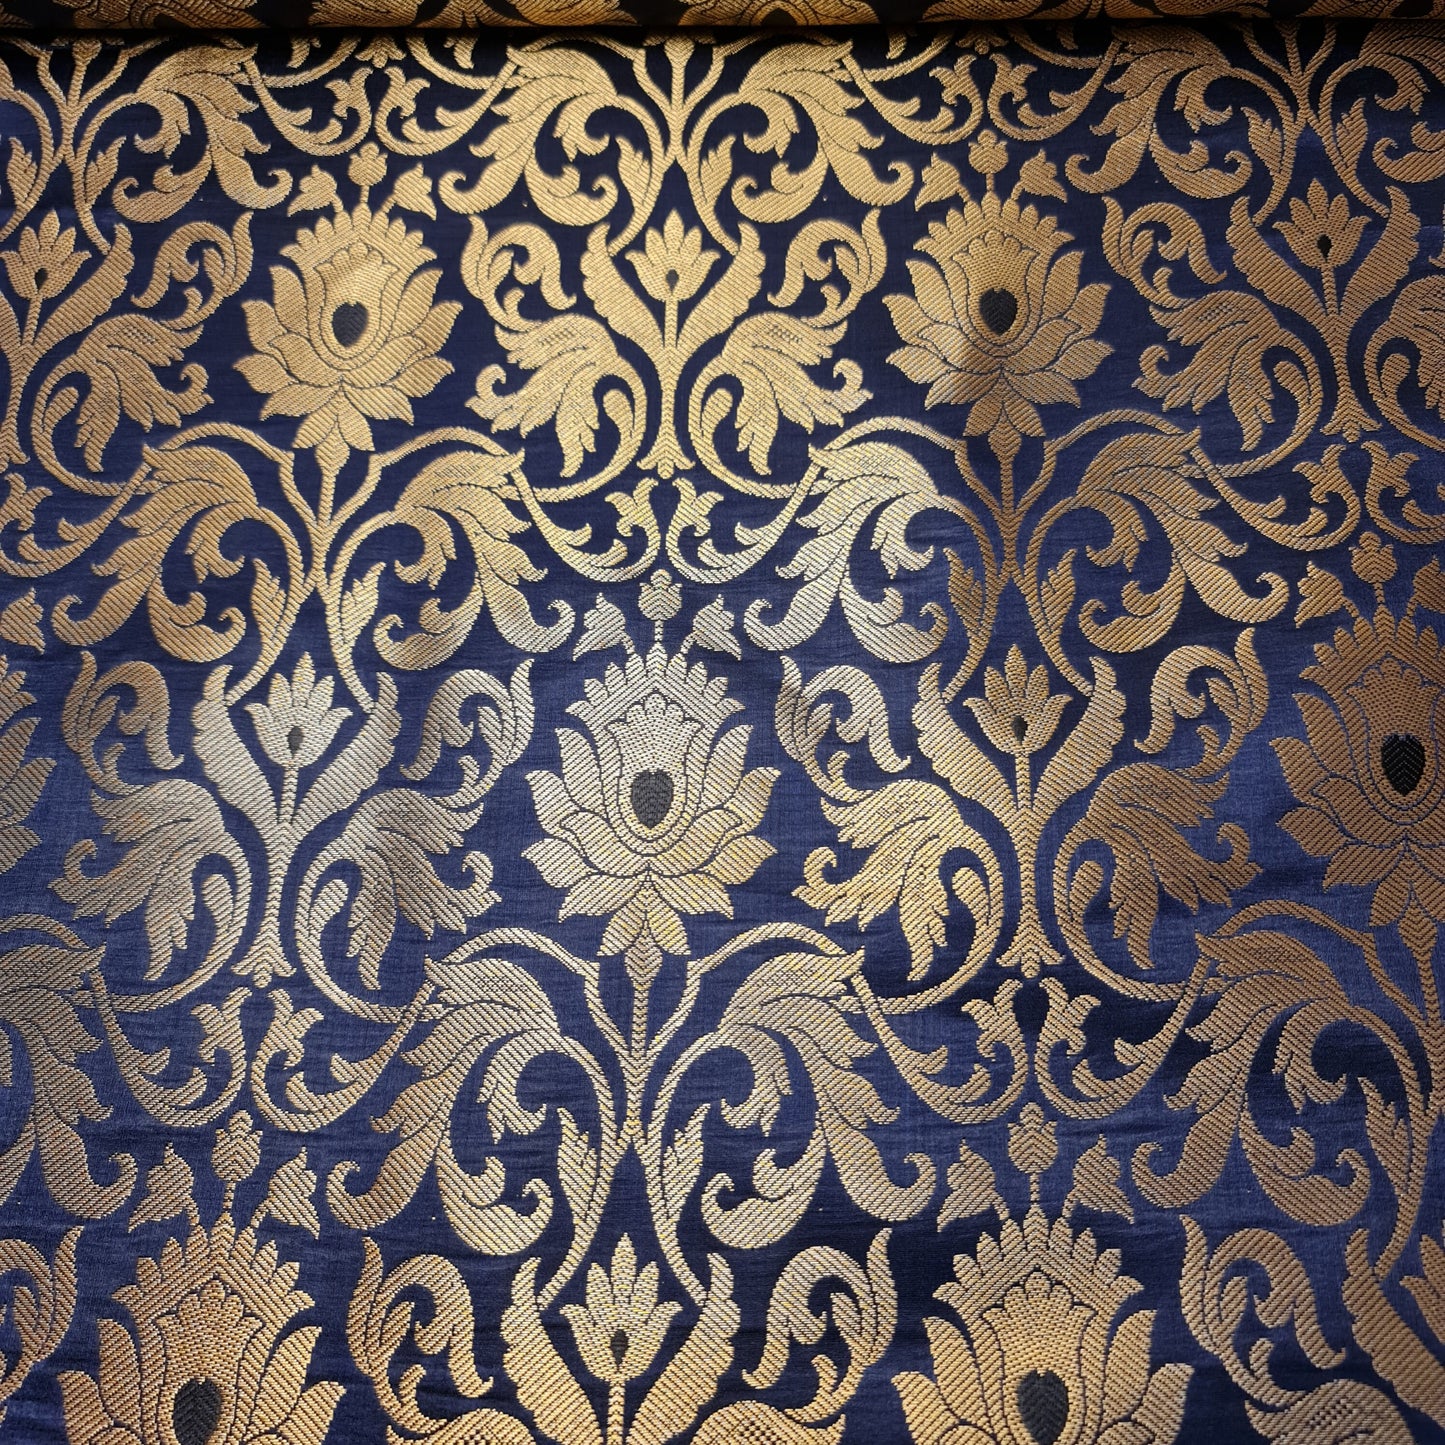 Luxurious Floral Gold Metallic Indian Banarasi Brocade Fabric 44" By The Meter (Navy Blue)